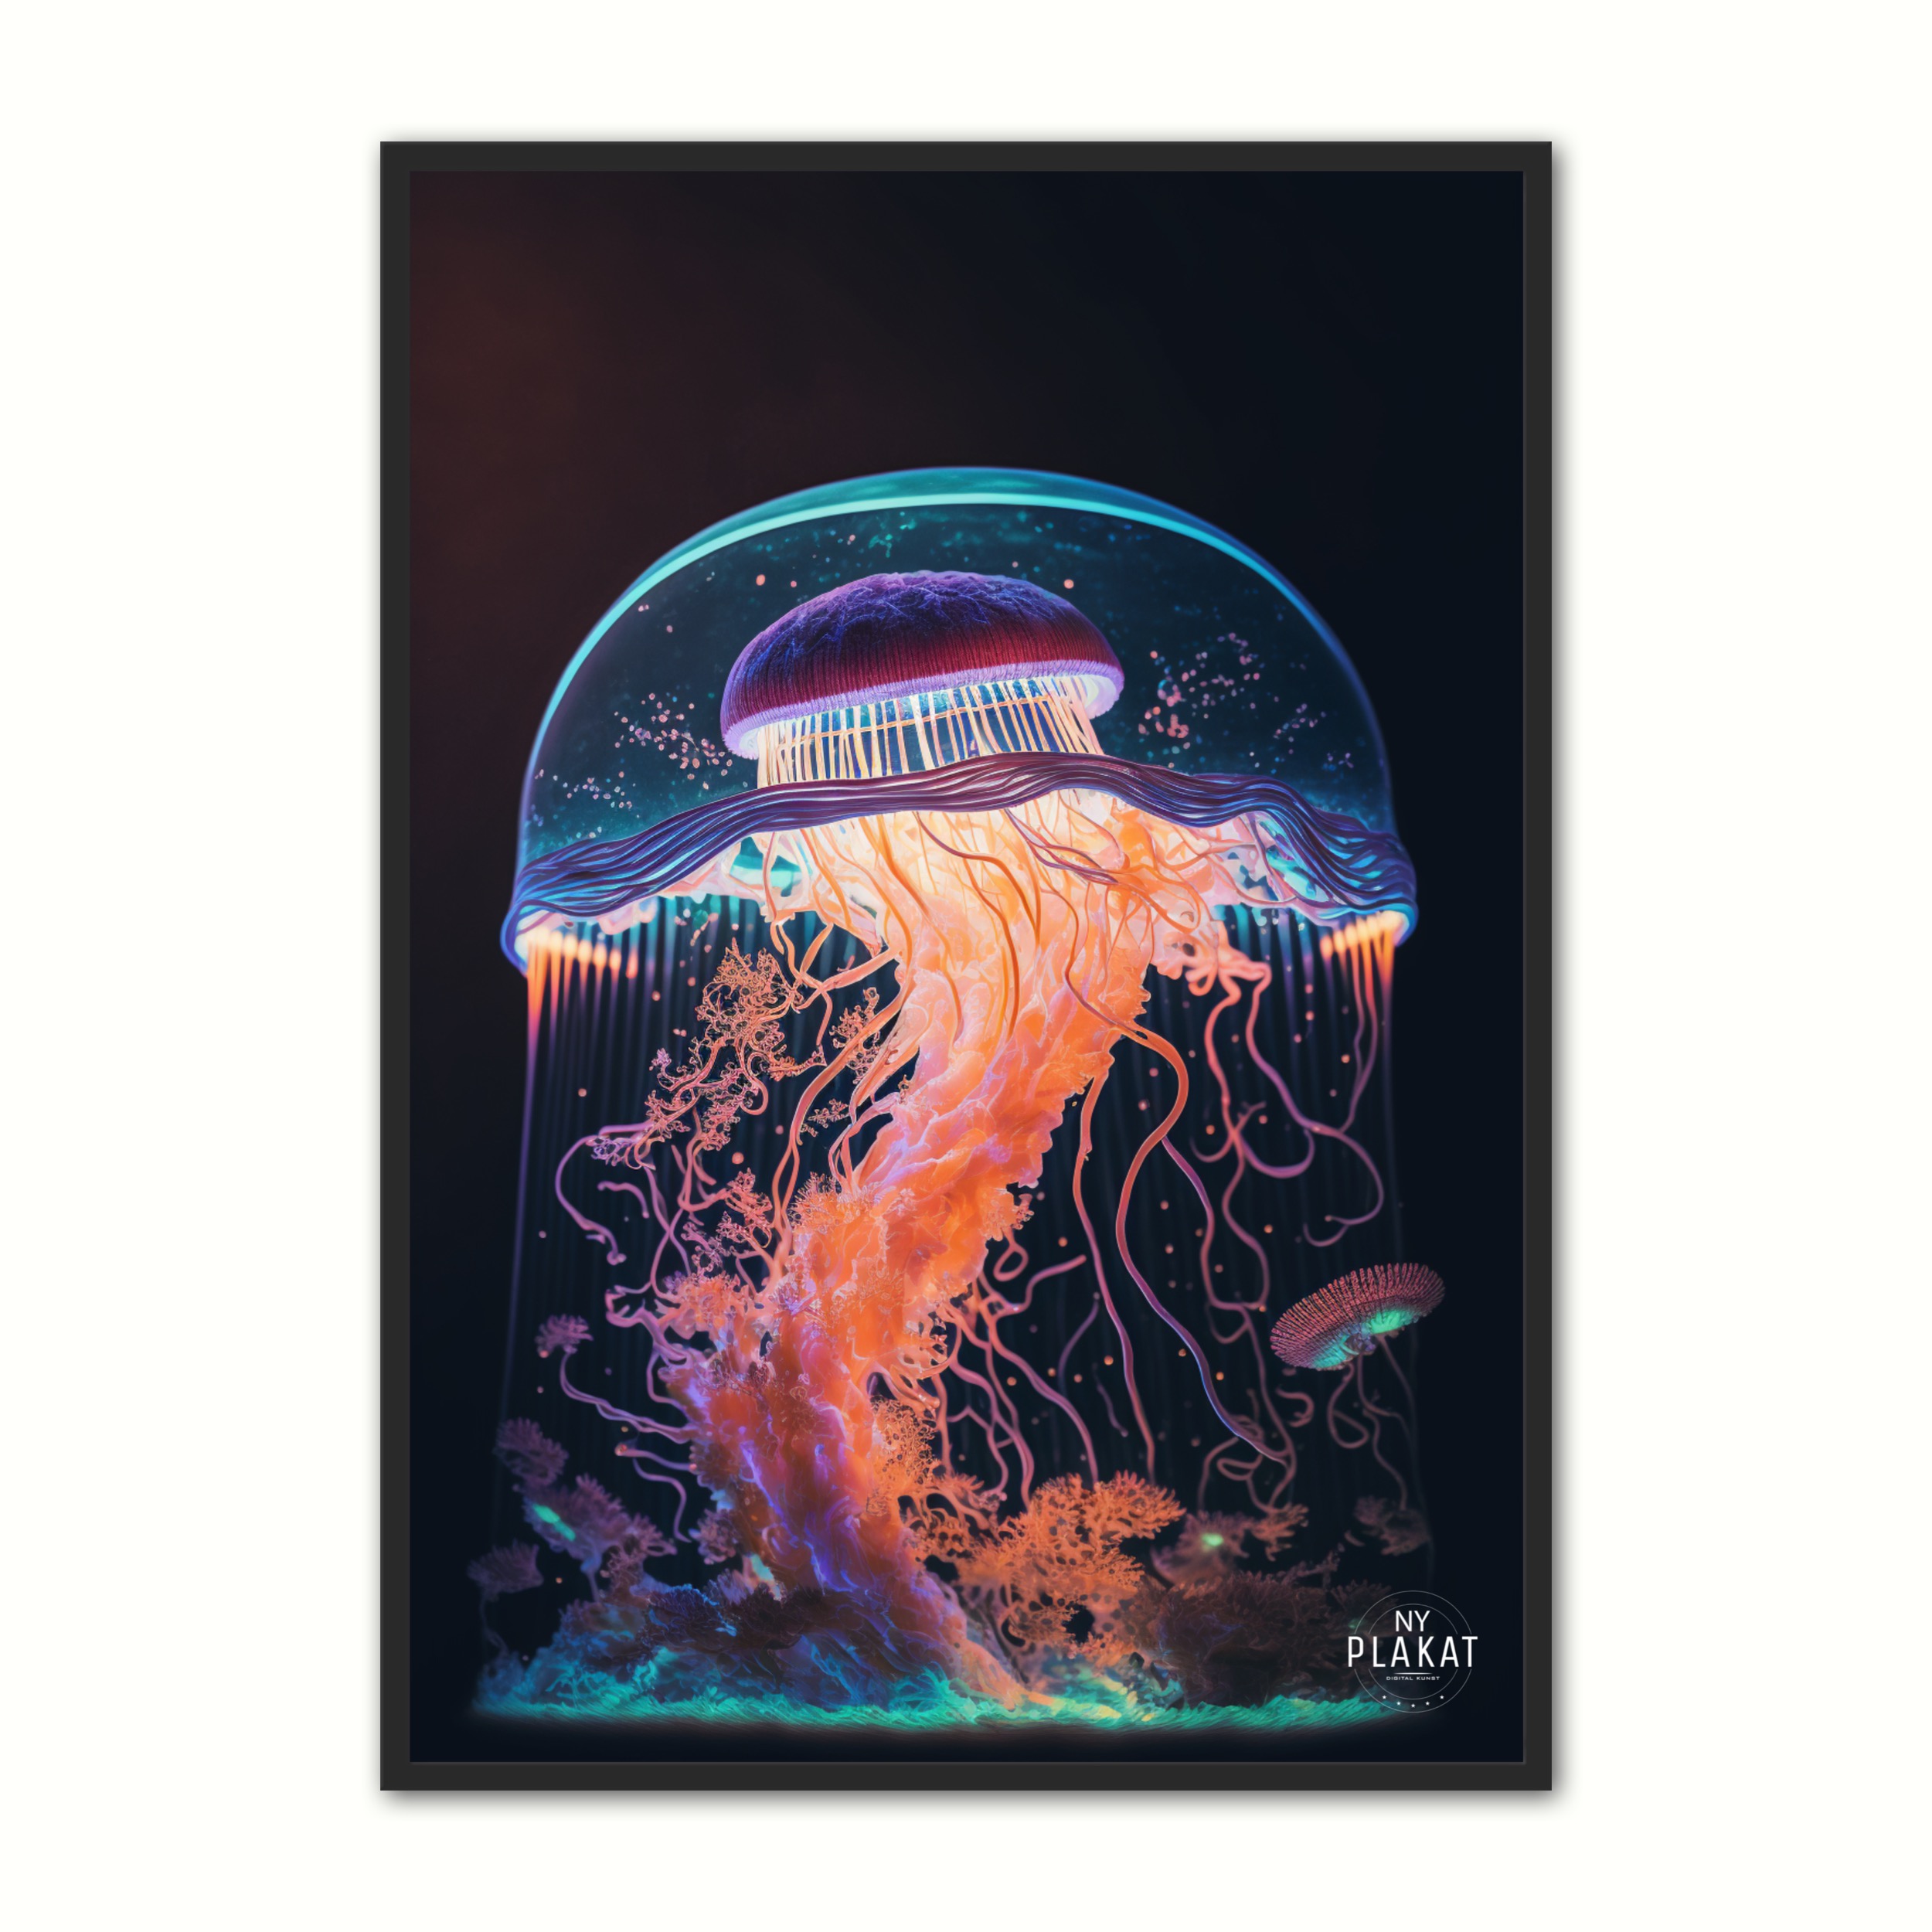 Se Jellyfish plakat No. 3 30 x 40 cm hos Nyplakat.dk